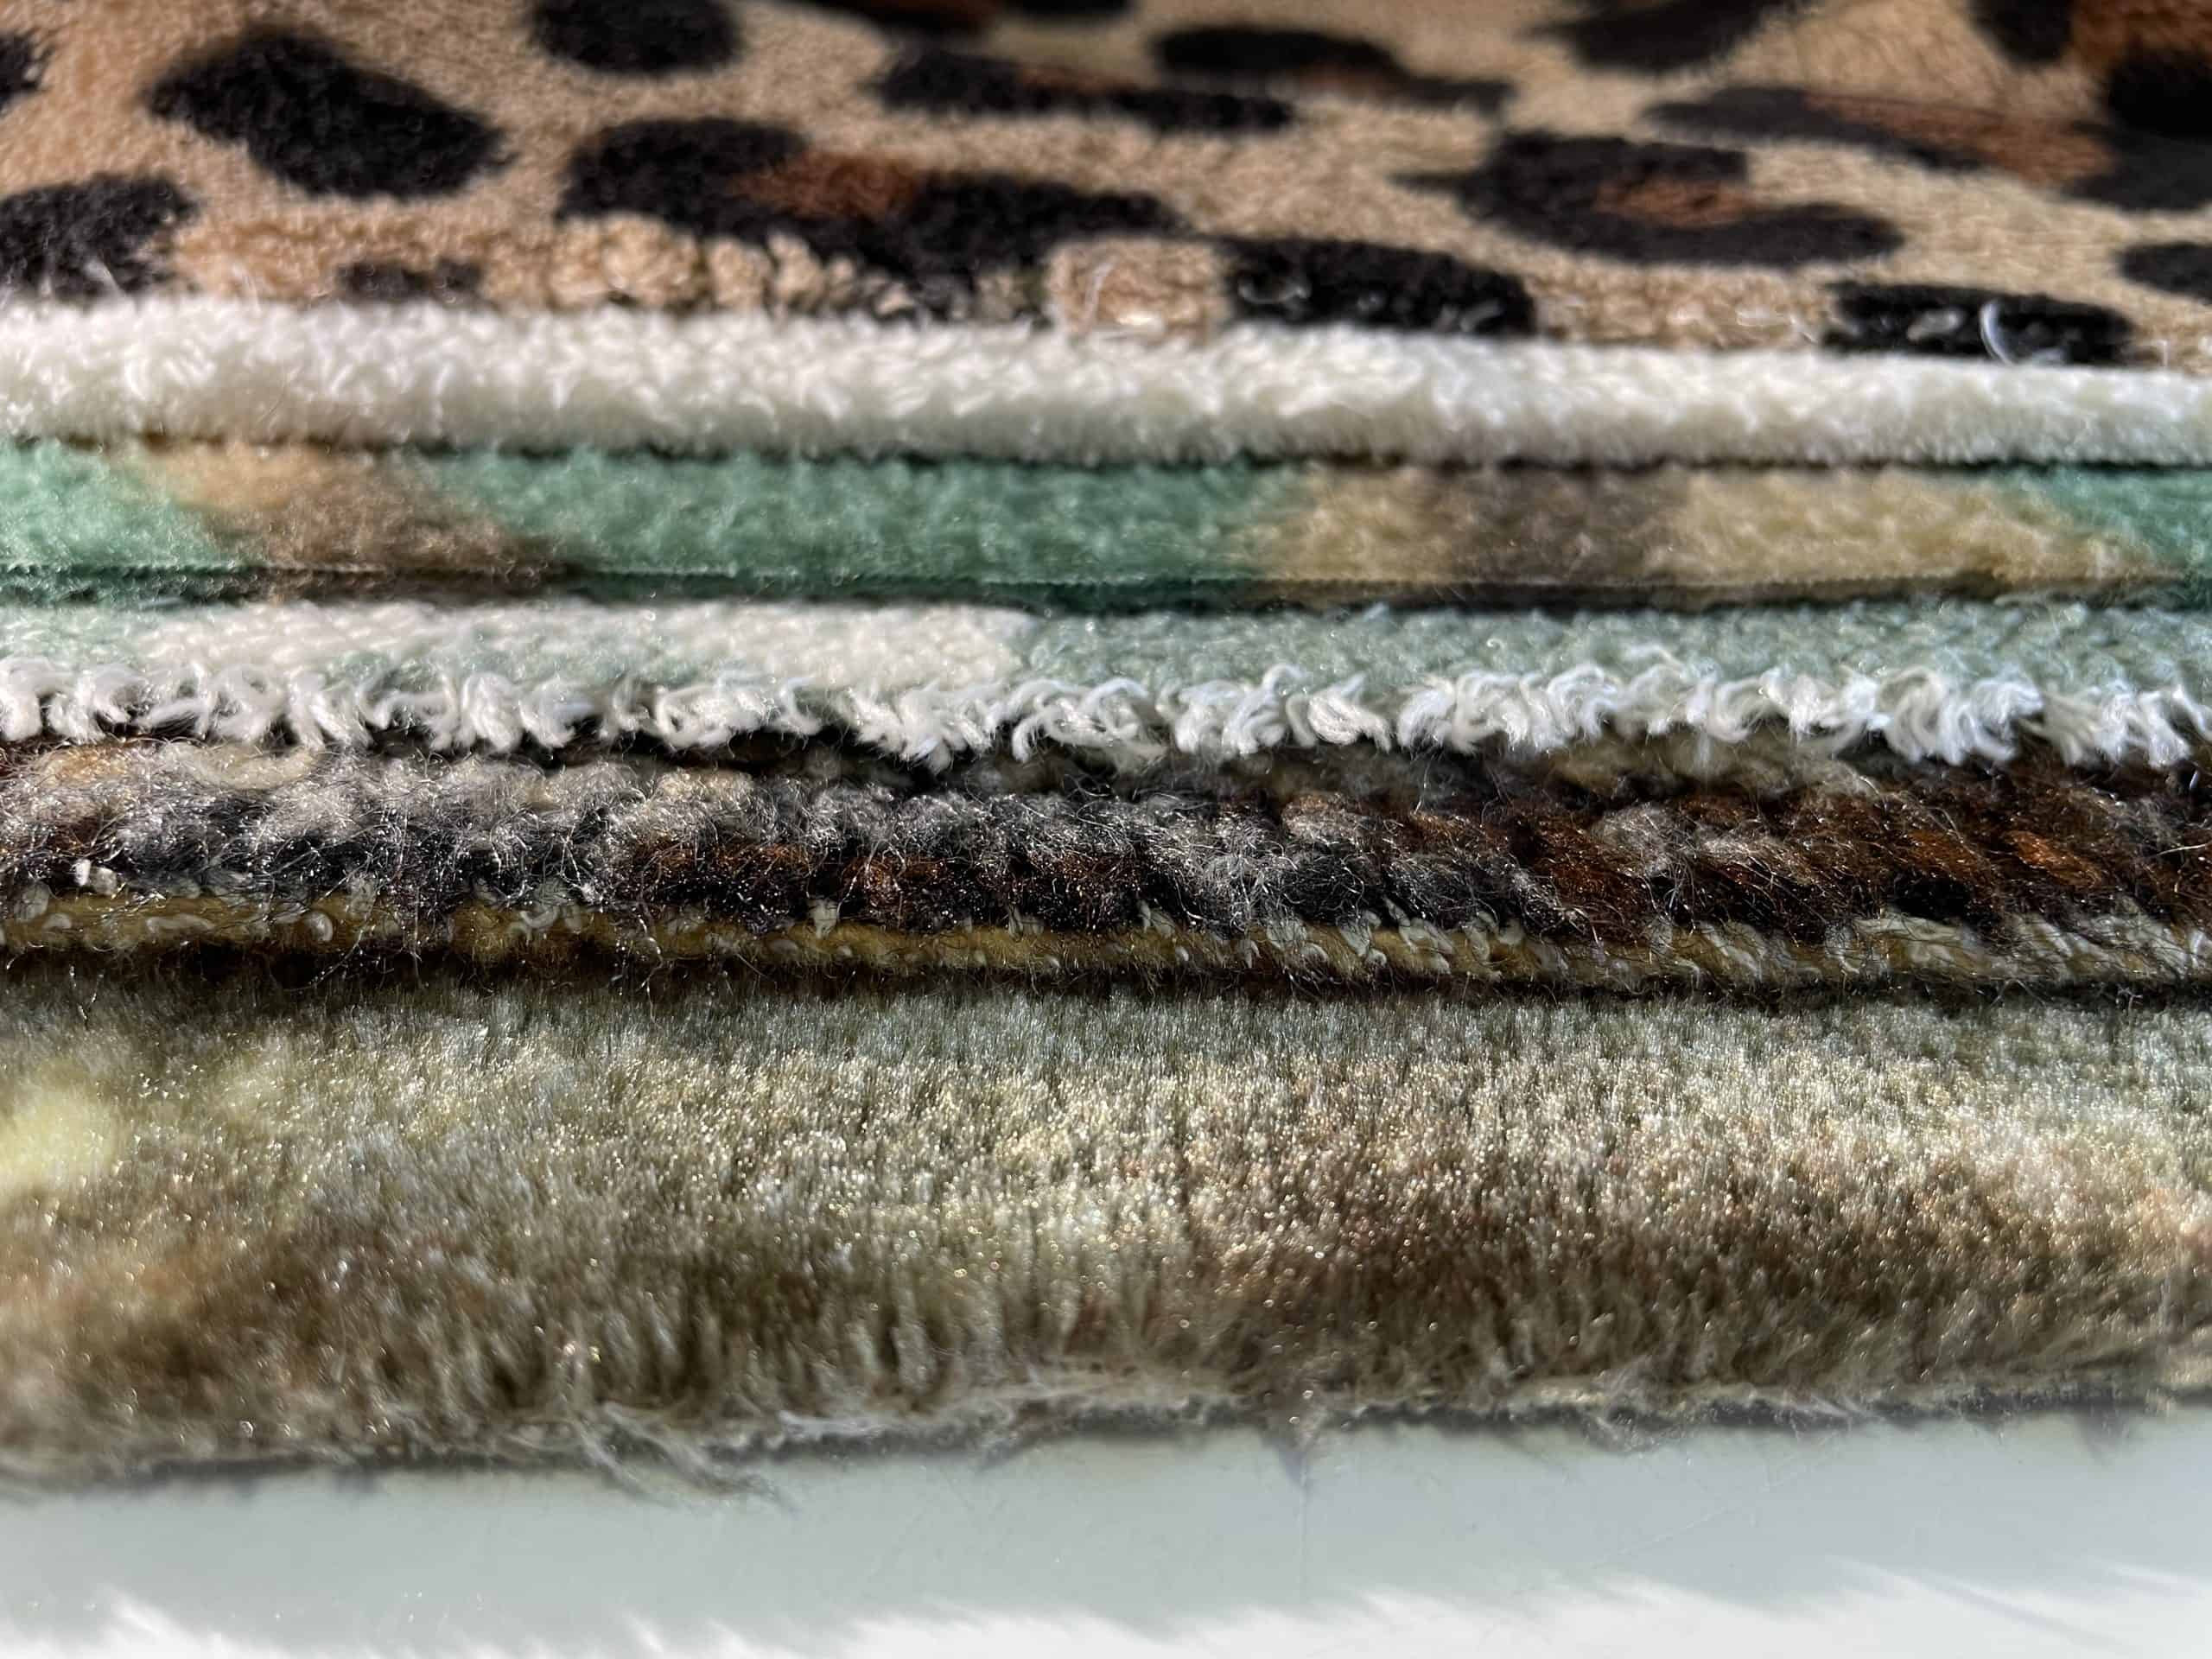 A stack of plush fleece fabric.